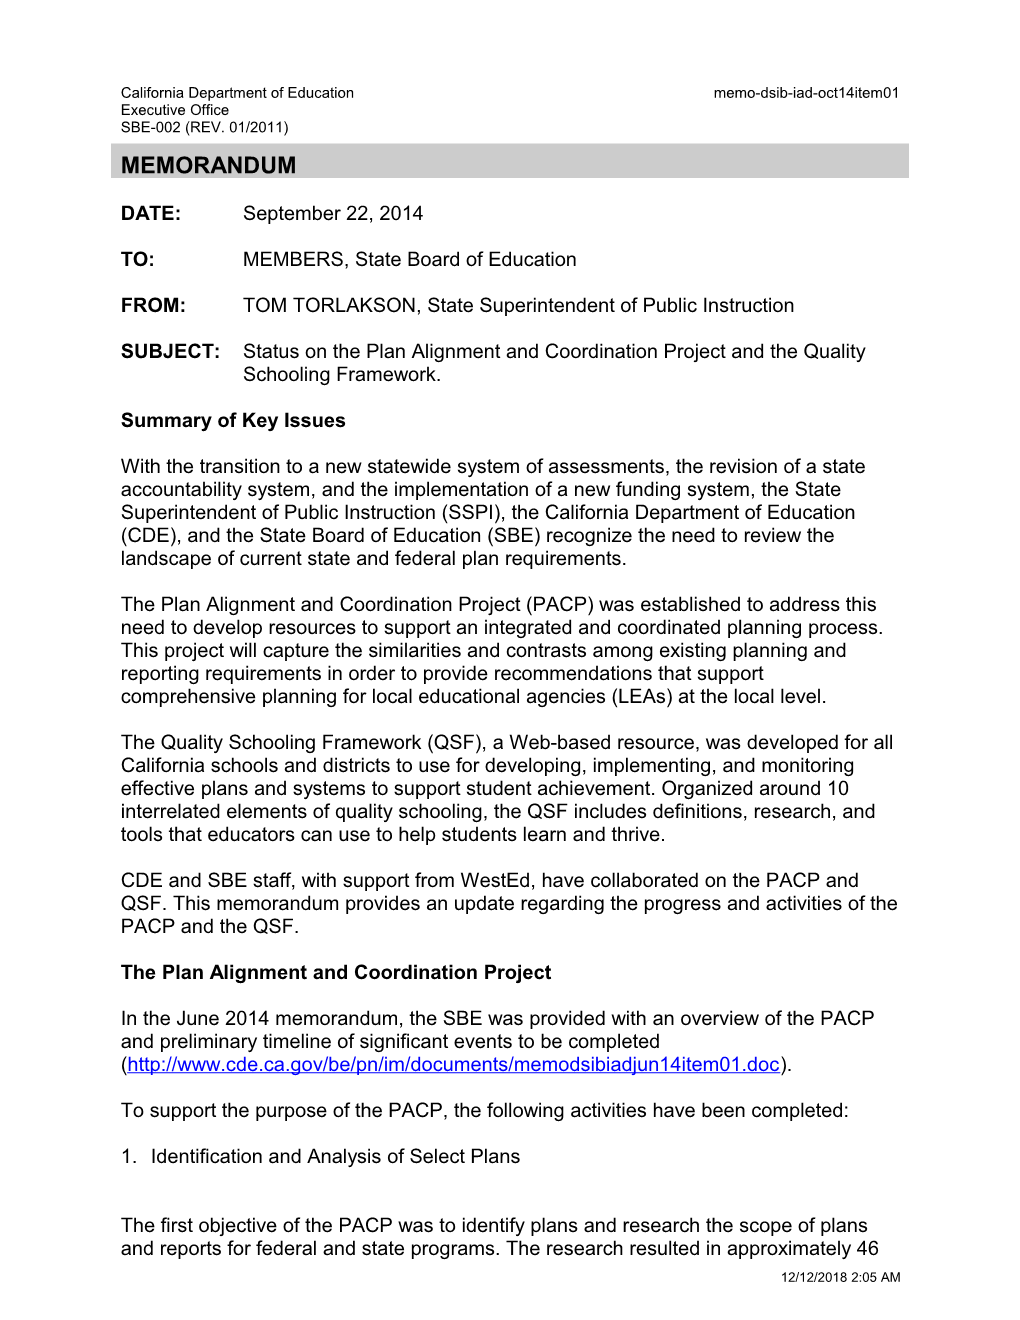 October 2014 DSIB IAD Item 01 - Information Memorandum (CA State Board of Education)